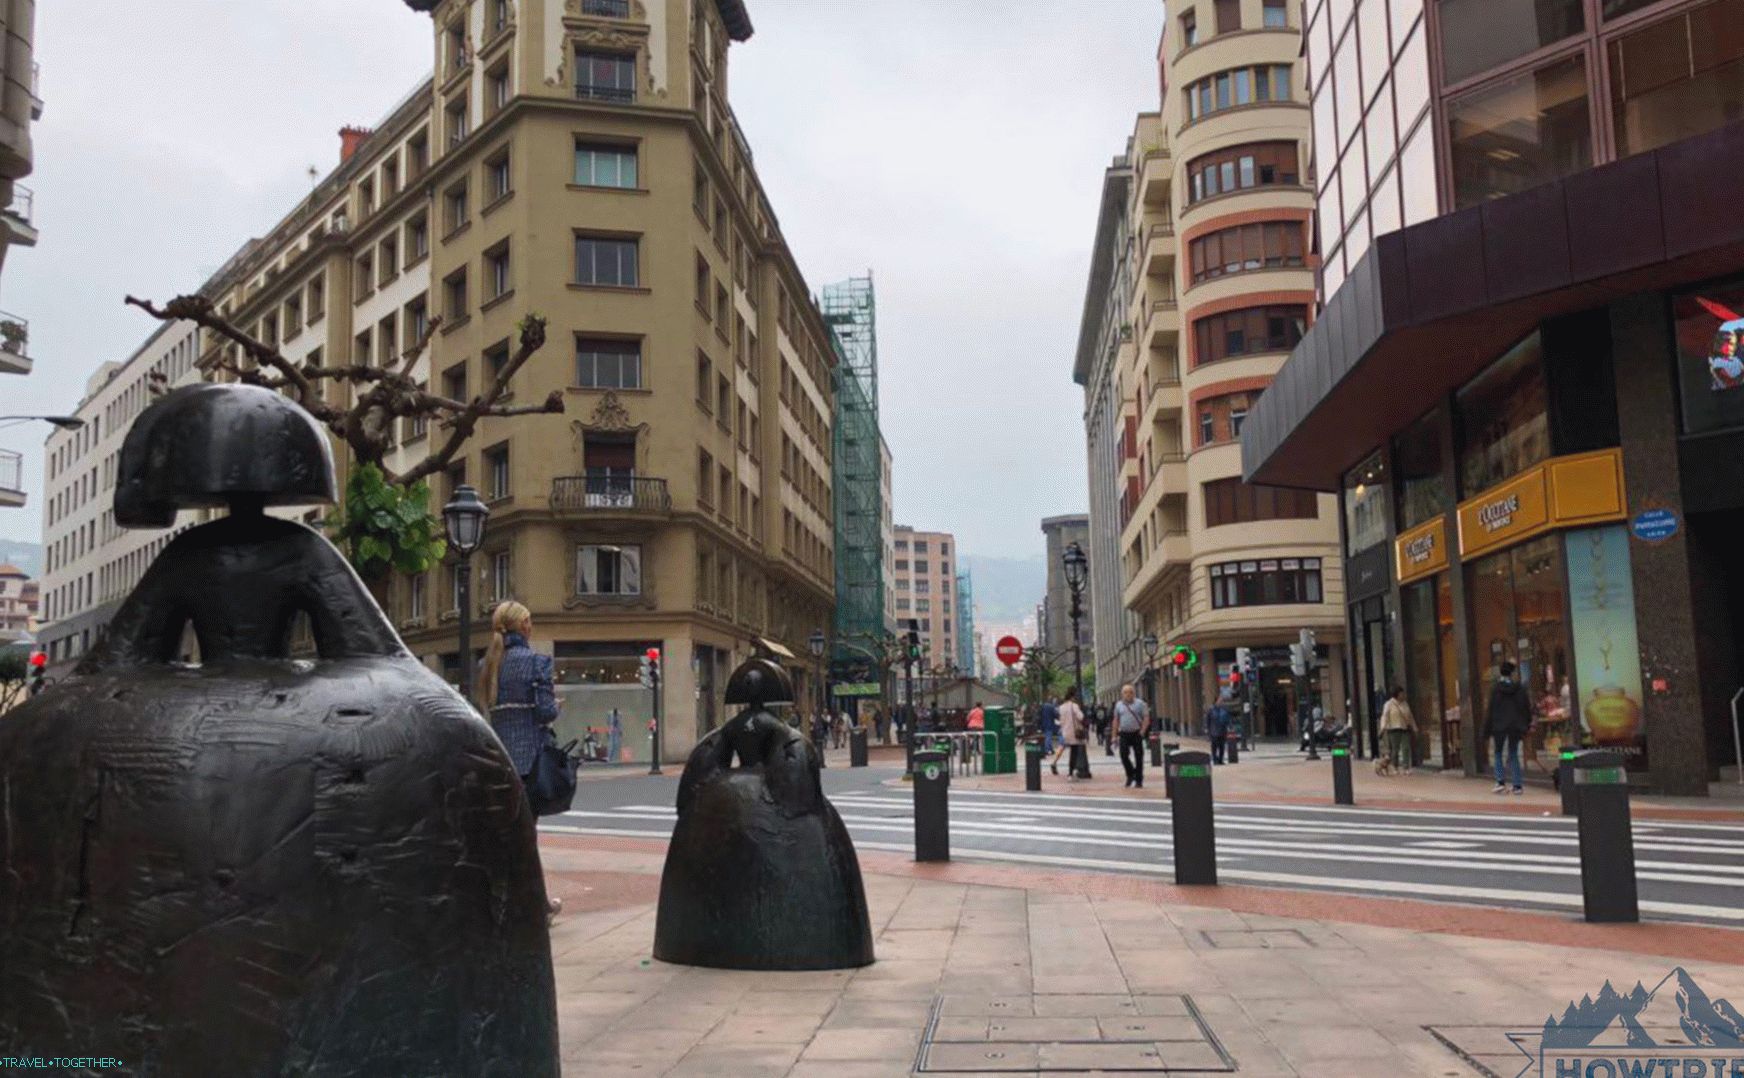 Bilbao (vedle San Sebastianu)